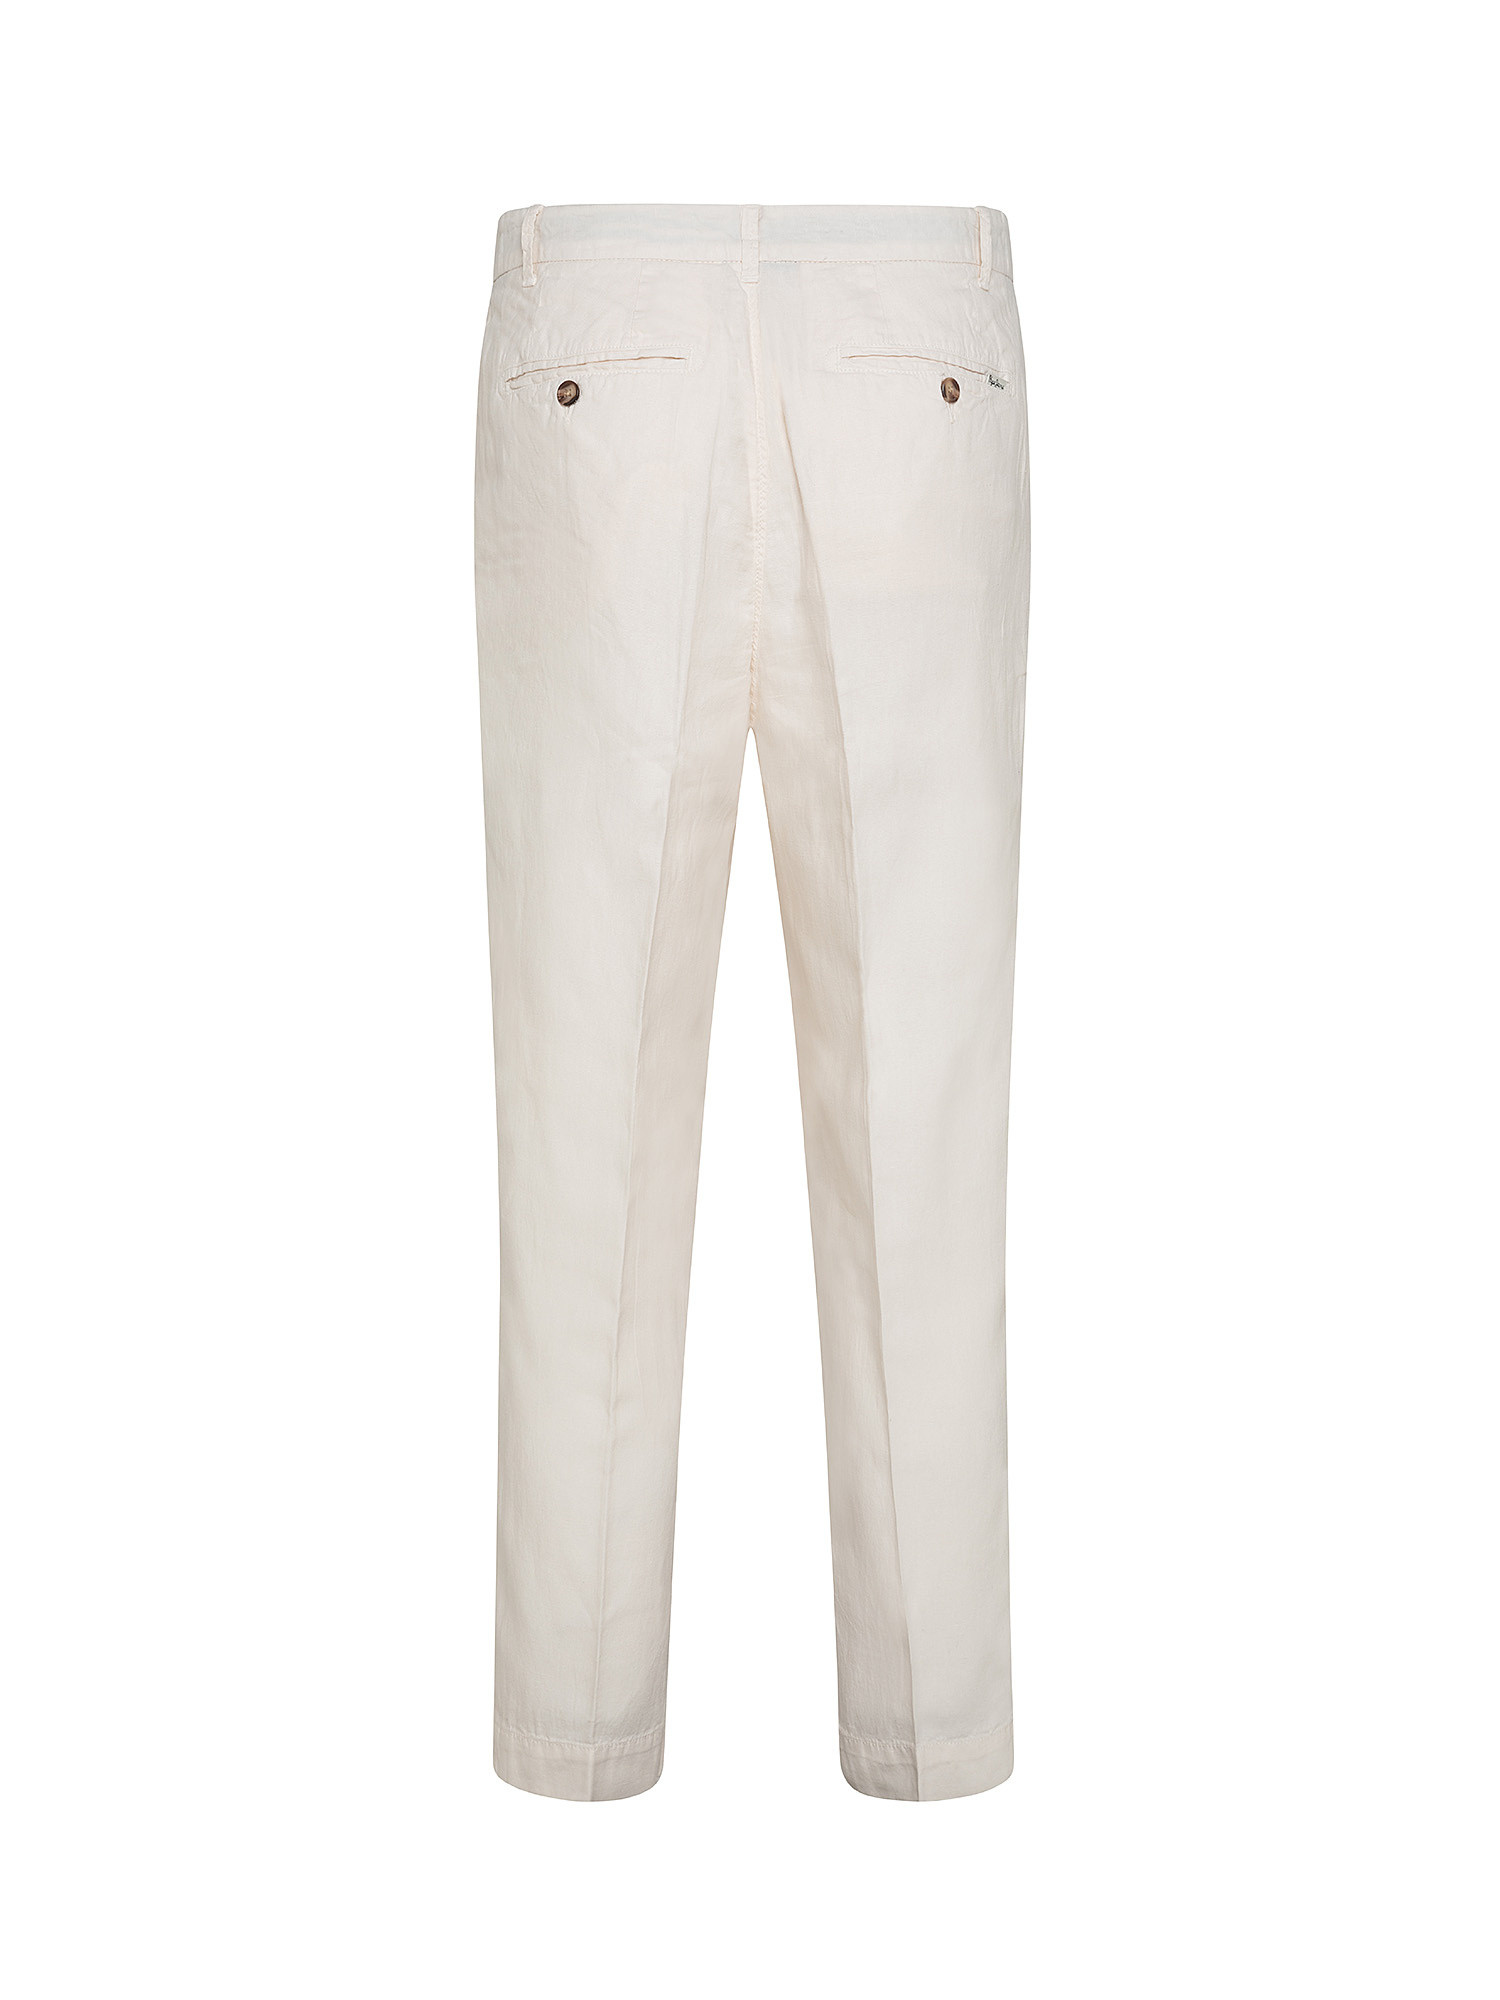 Pantalone in misto lino, Bianco panna, large image number 1